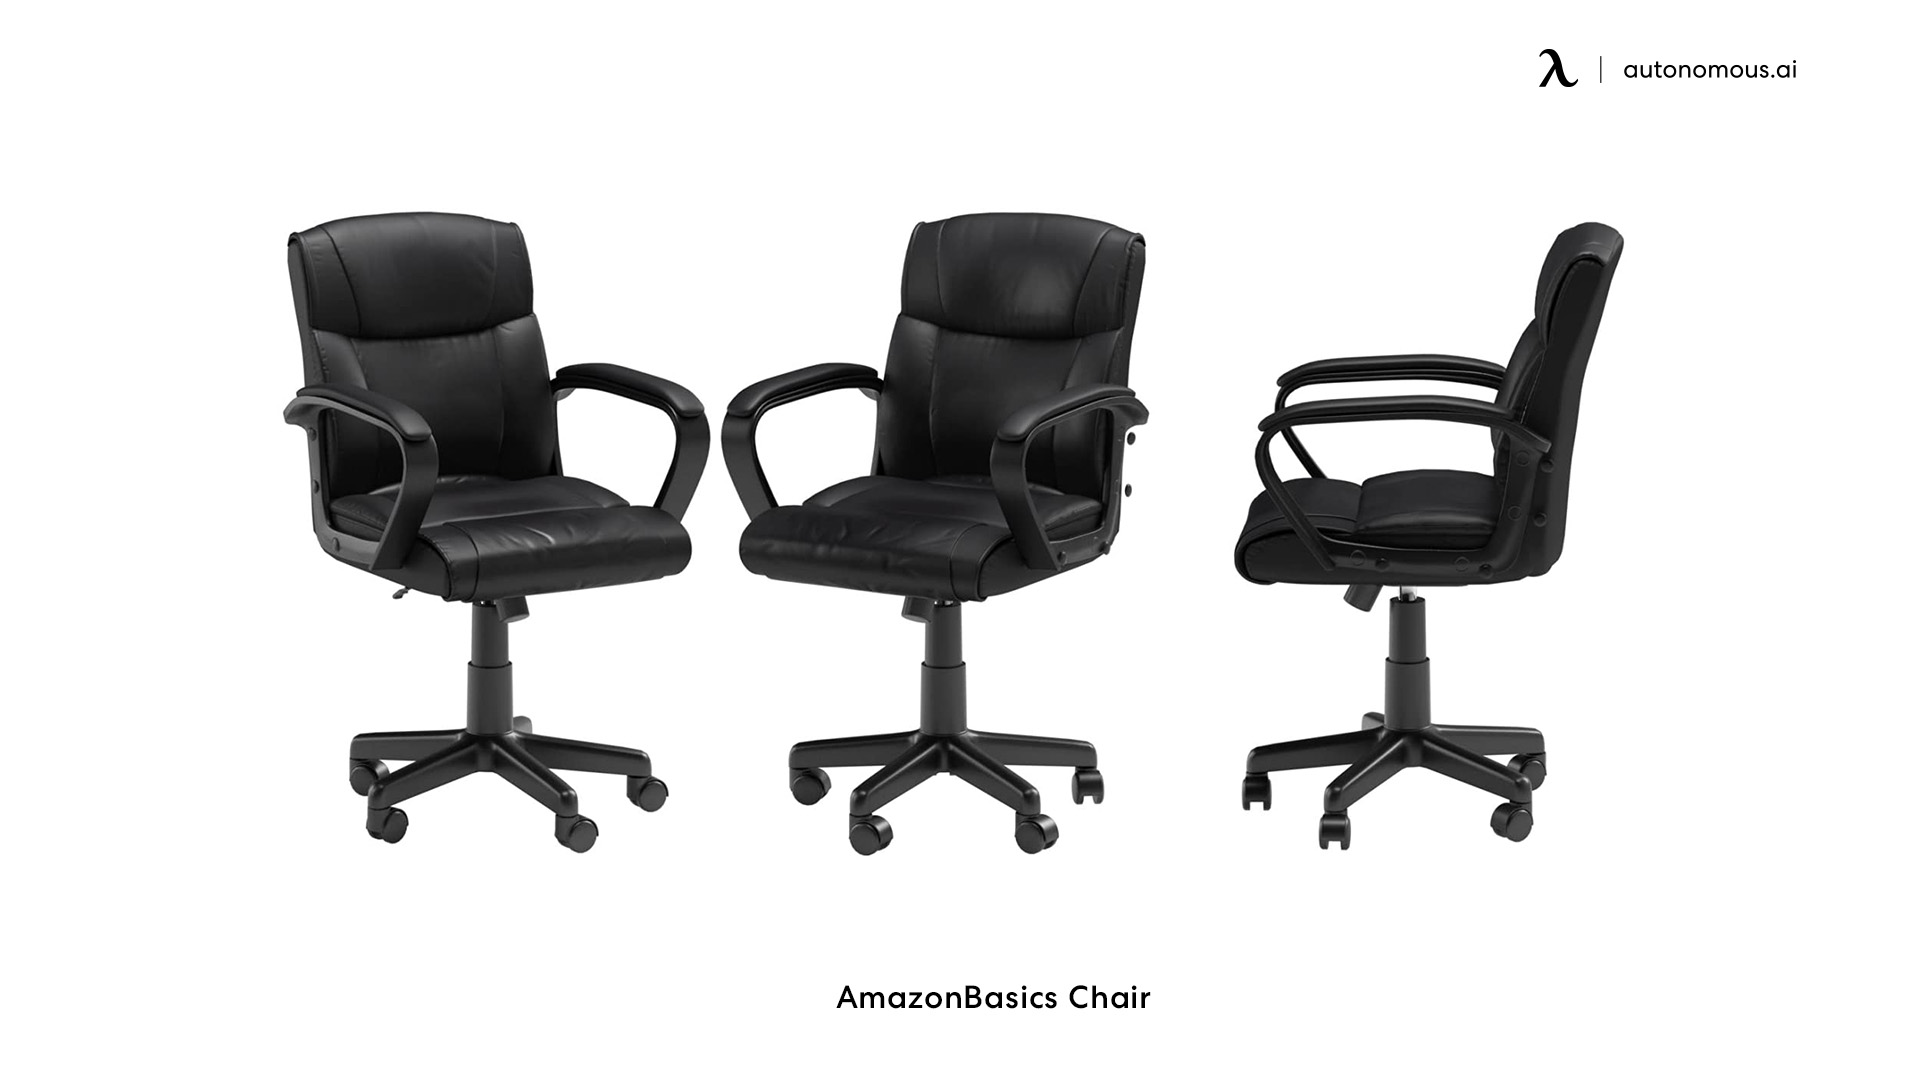 AmazonBasics colored desk chairs